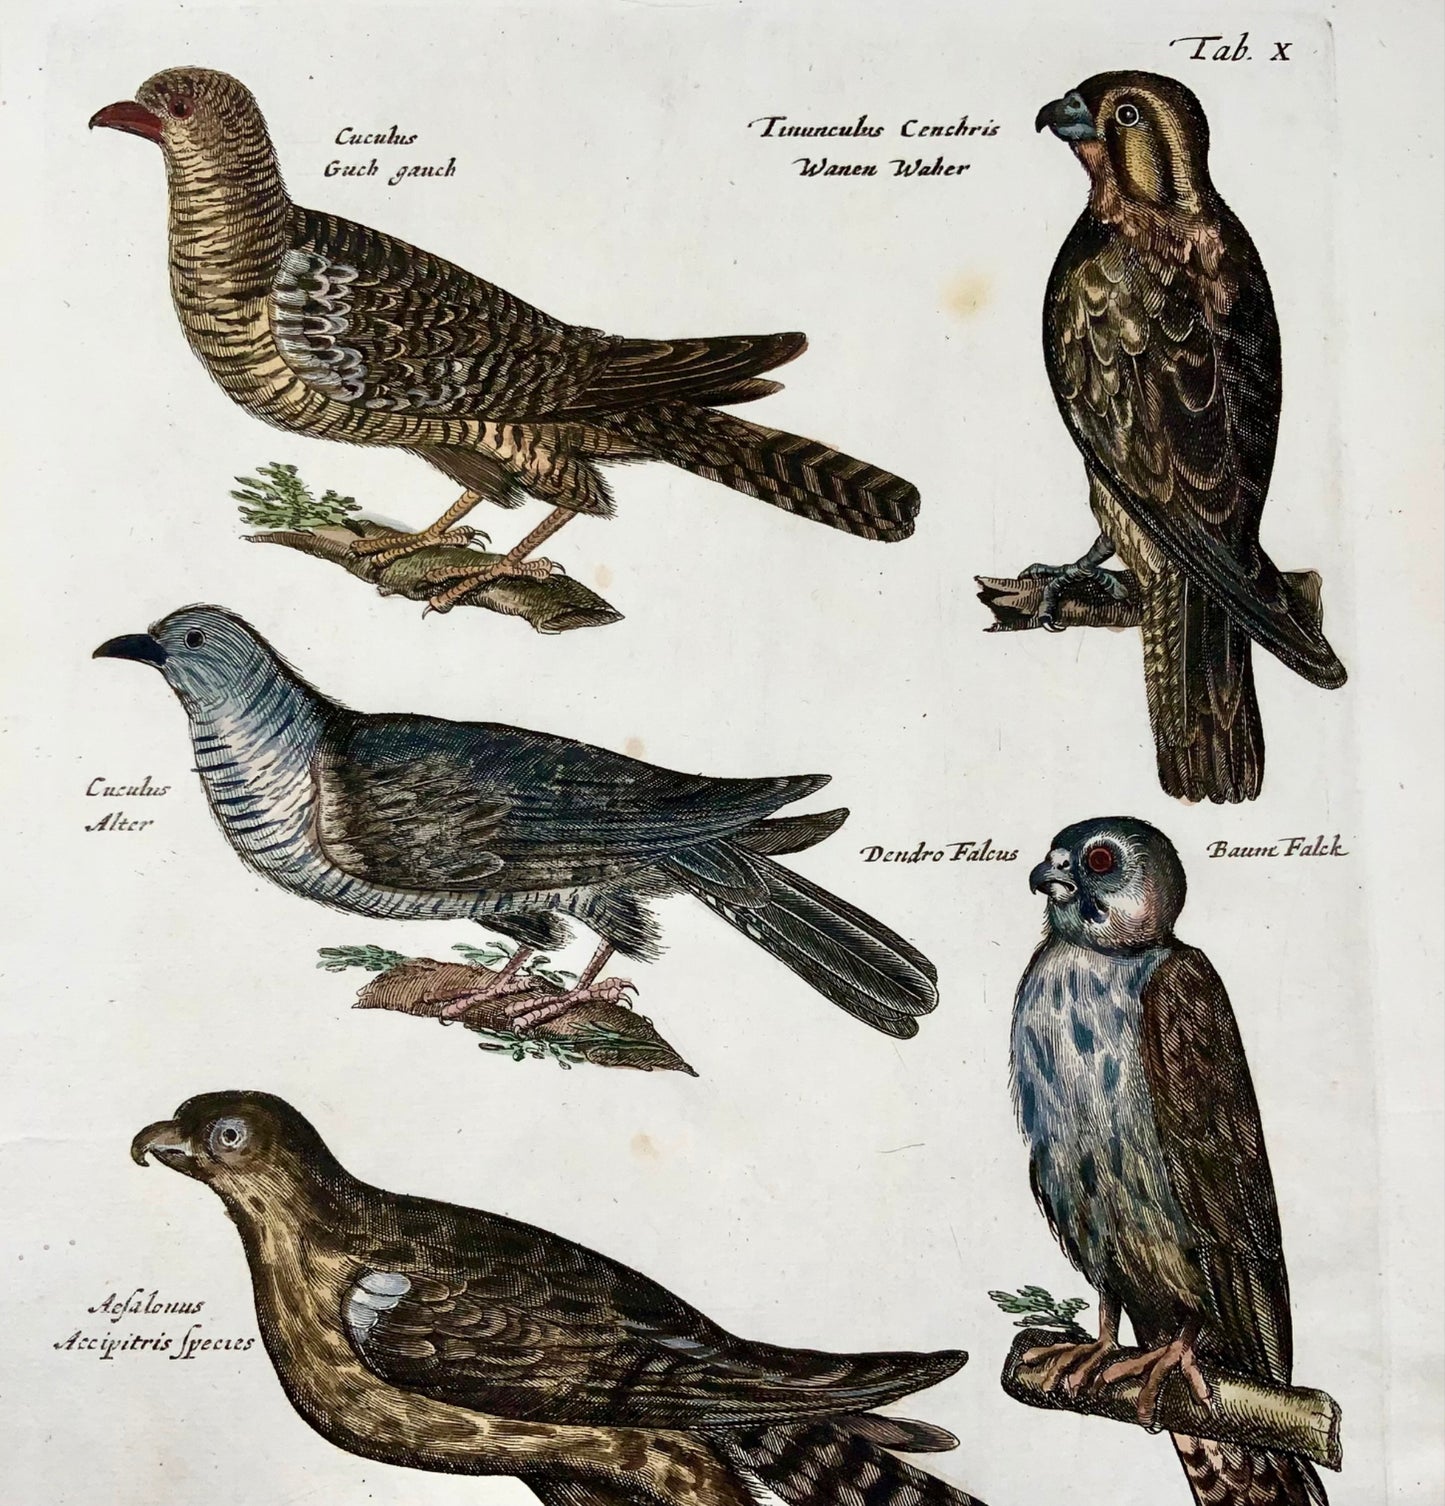 1657 Cuckoo, Falcon, Hobby, Shrike,birds, Merian, folio, hand coloured engraving